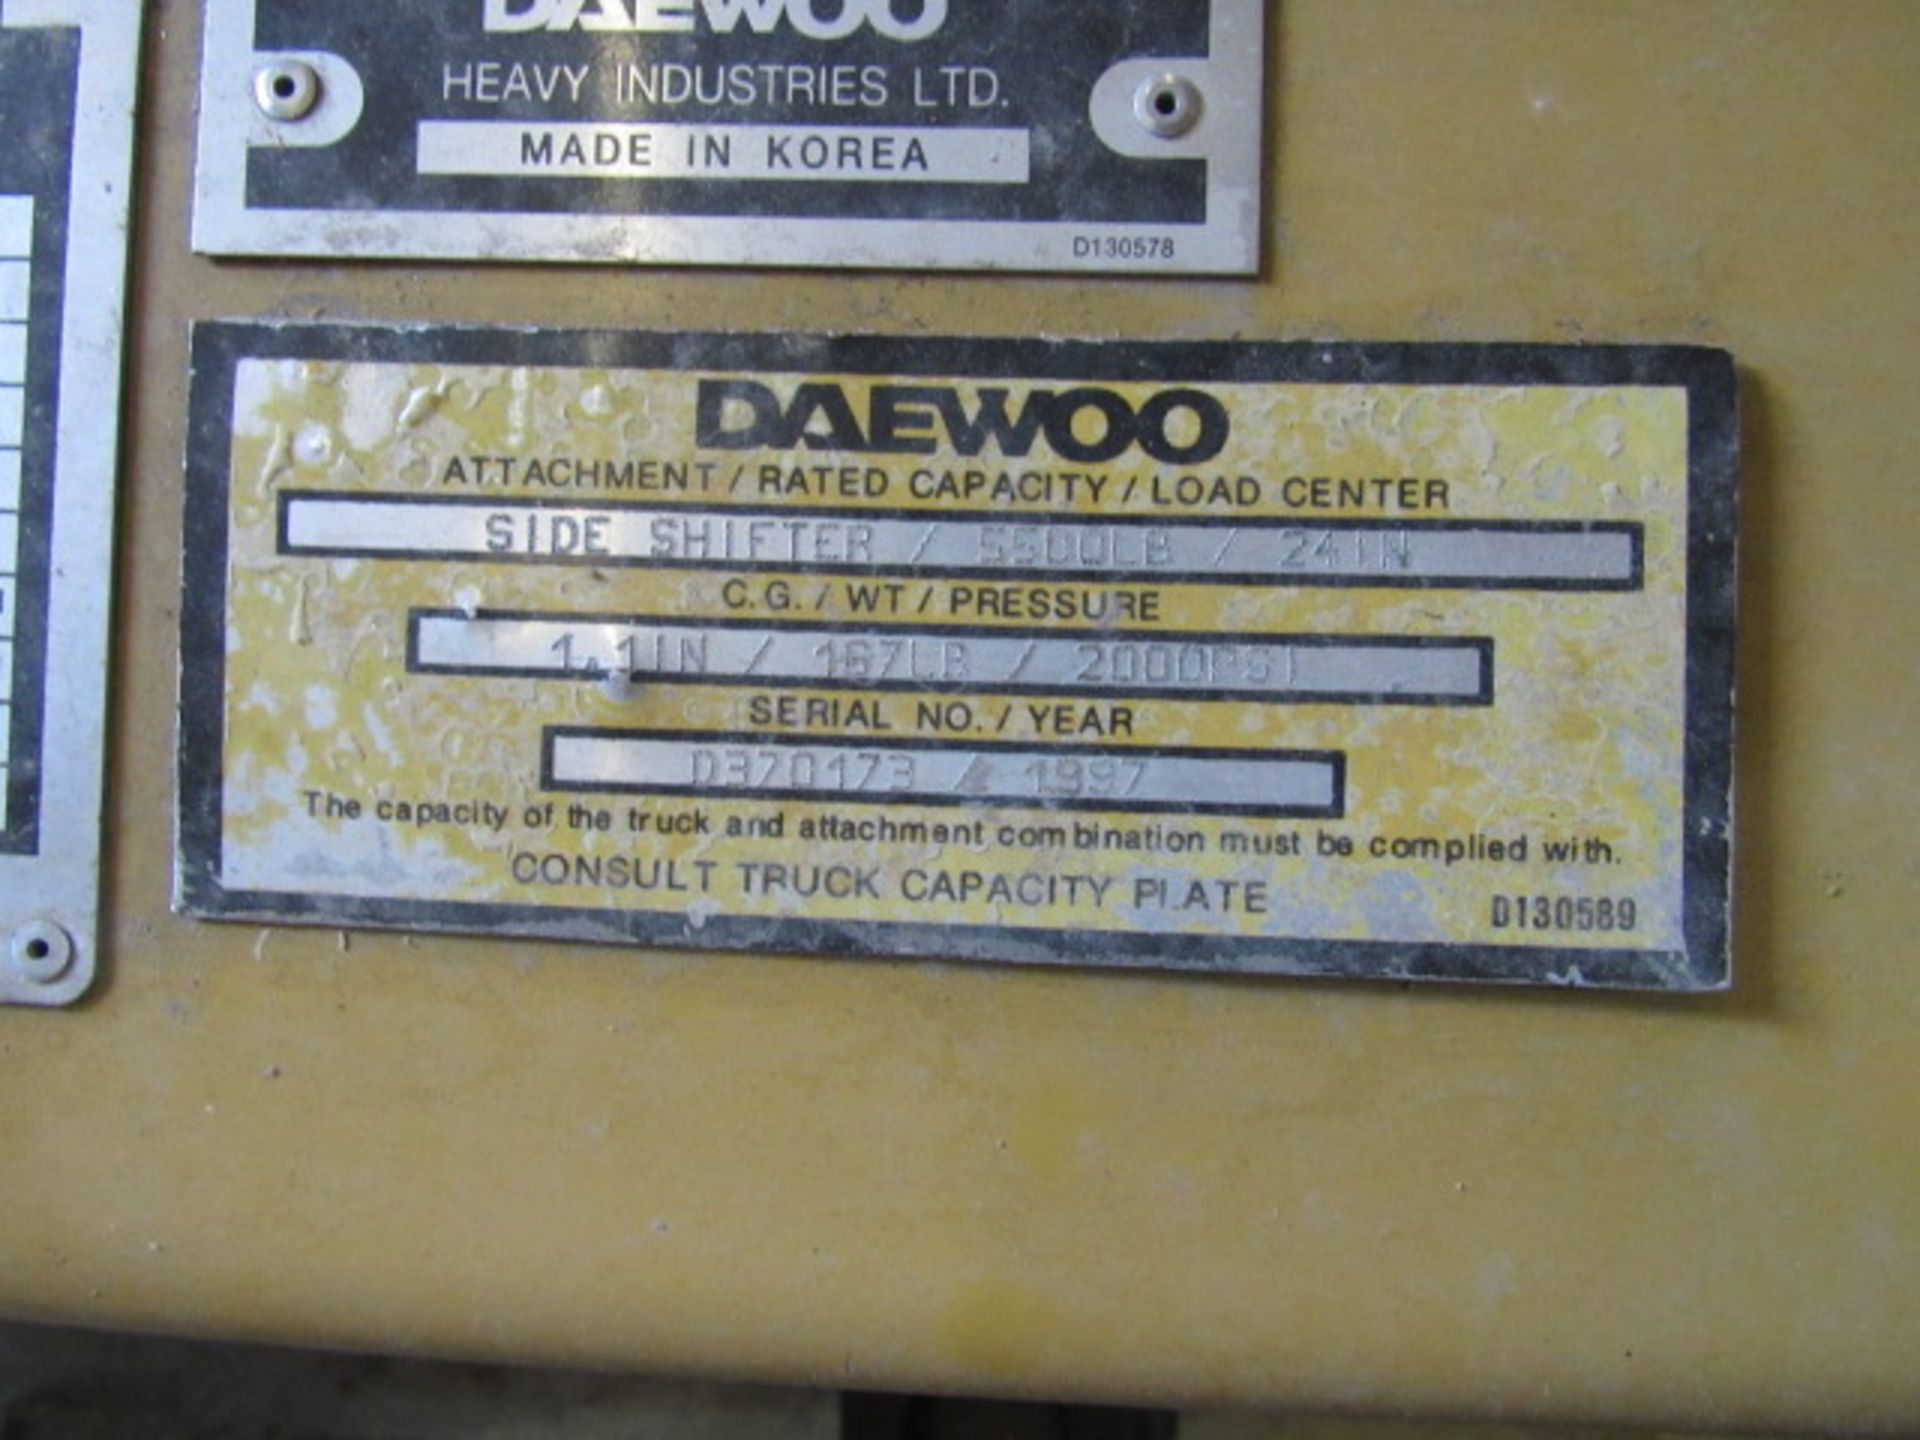 Daewoo 5500lb Capacity Propane Forklift - Image 8 of 9